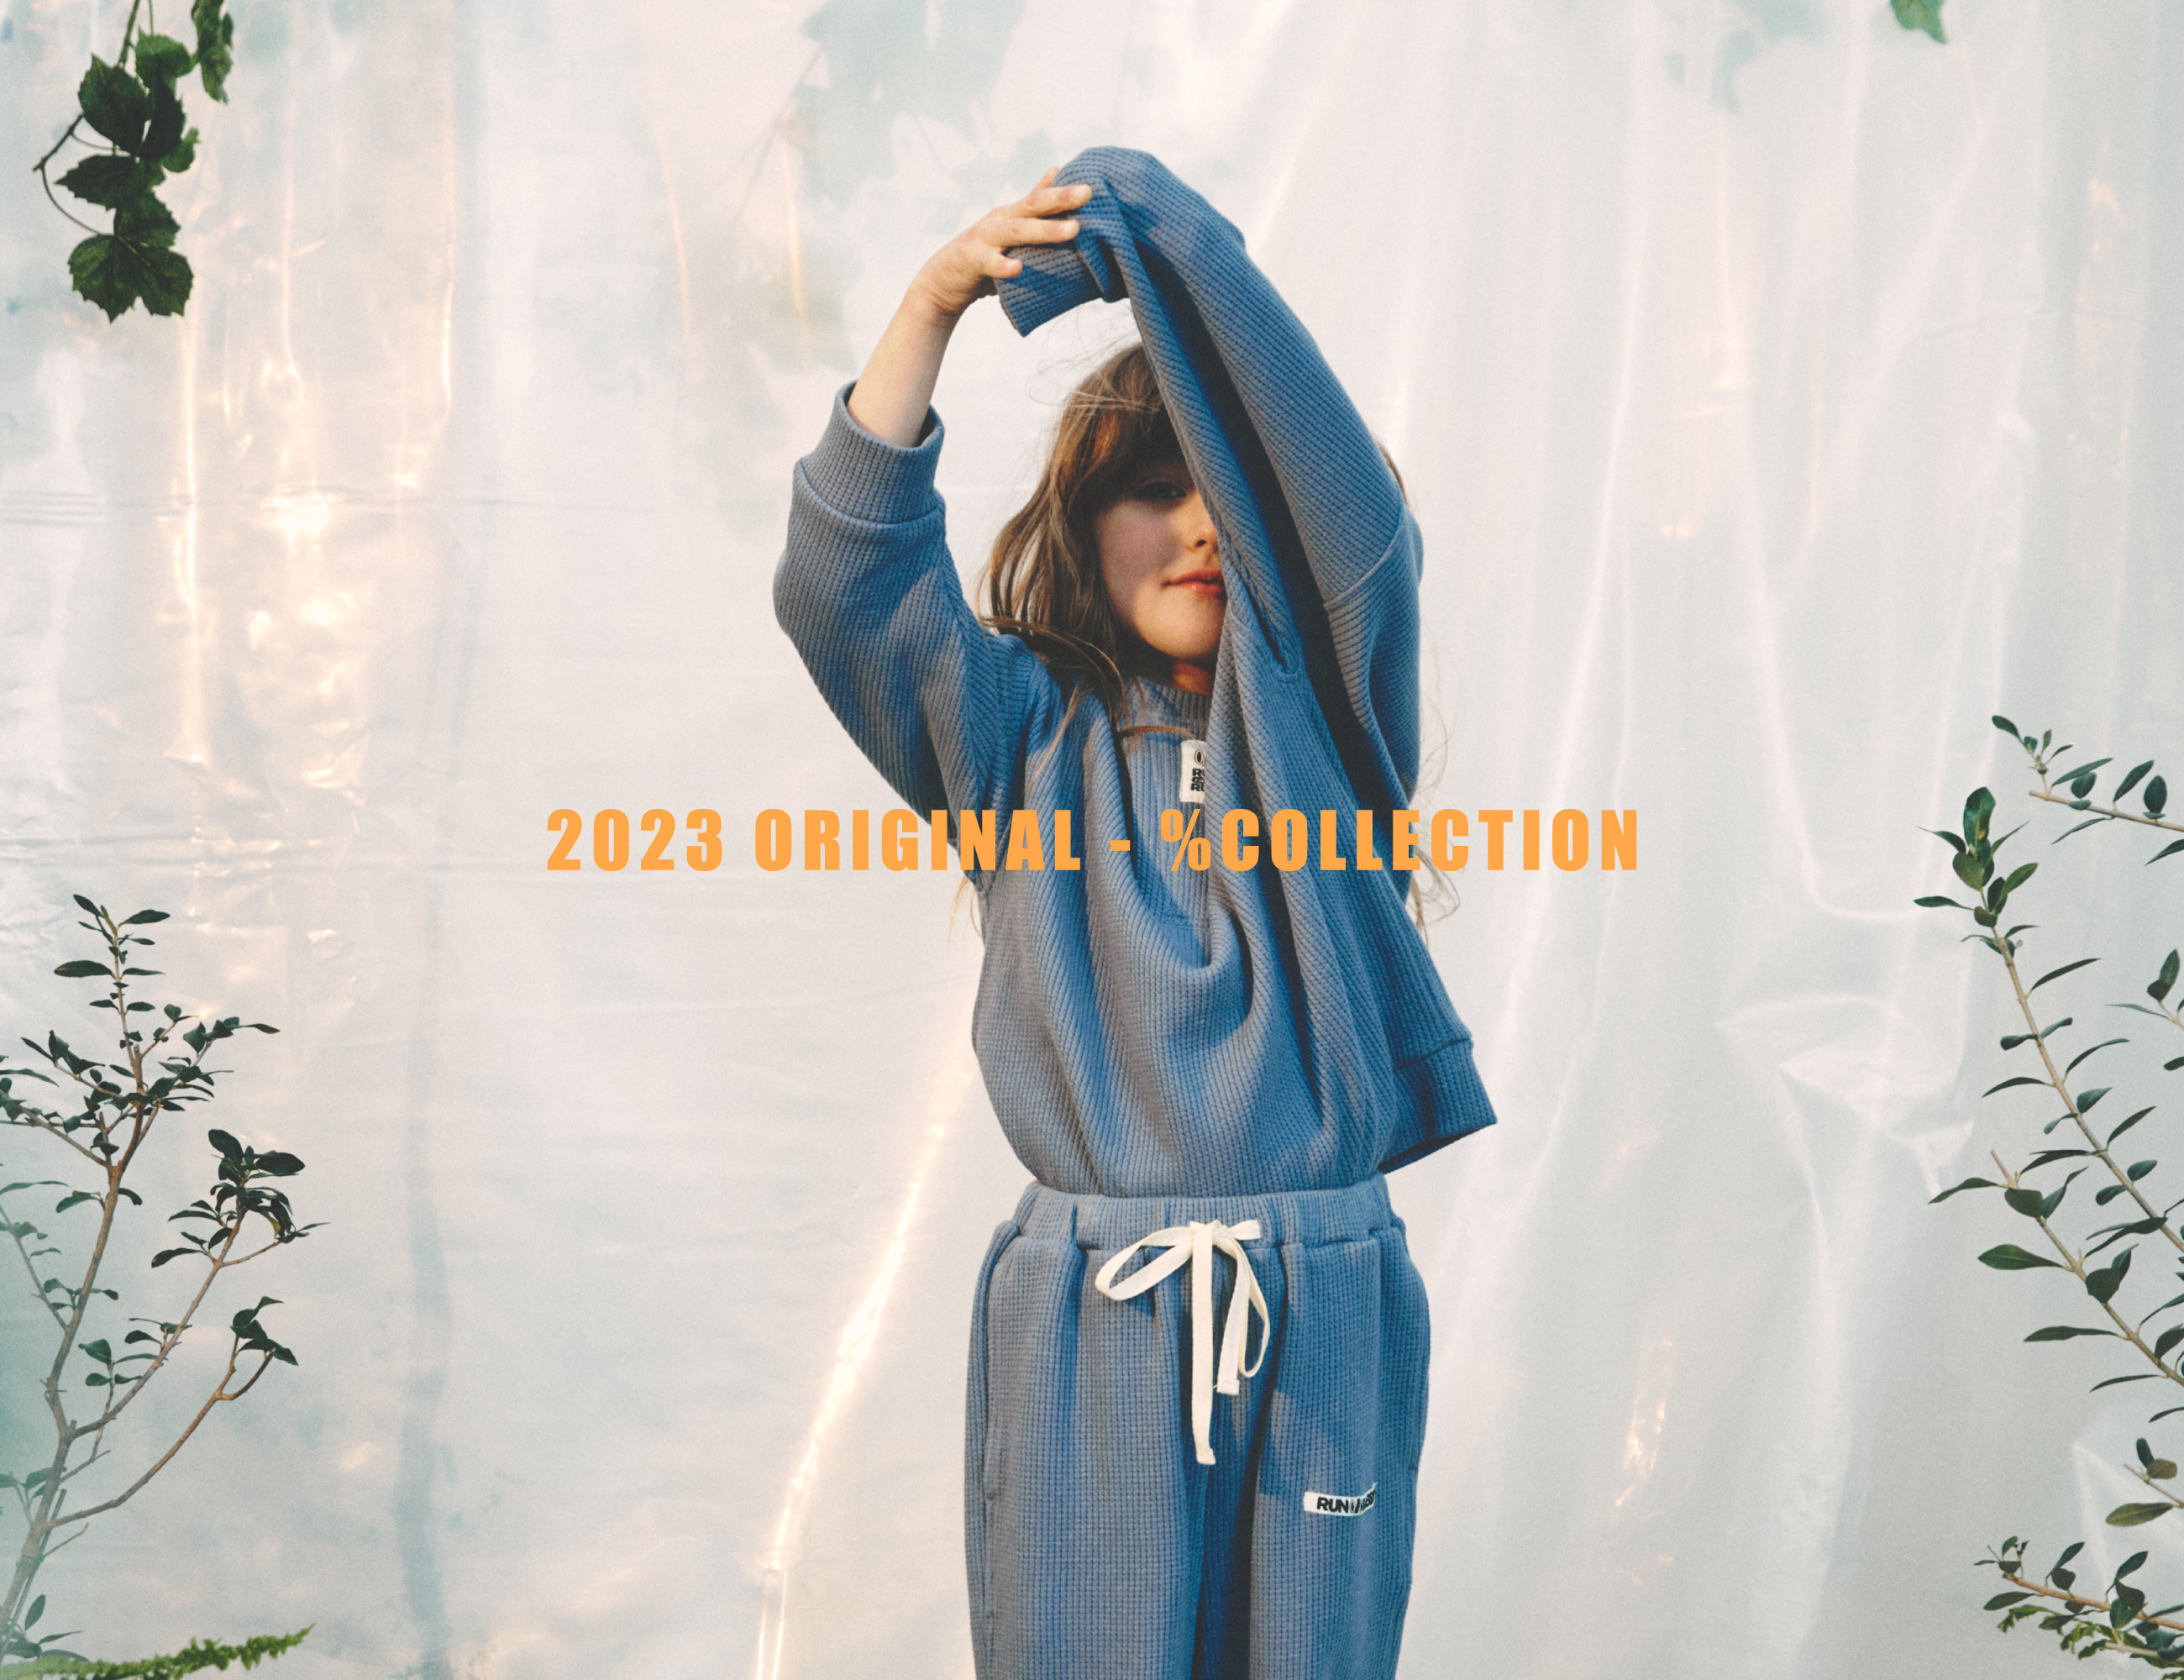 2023 ORIGINAL - %Collection